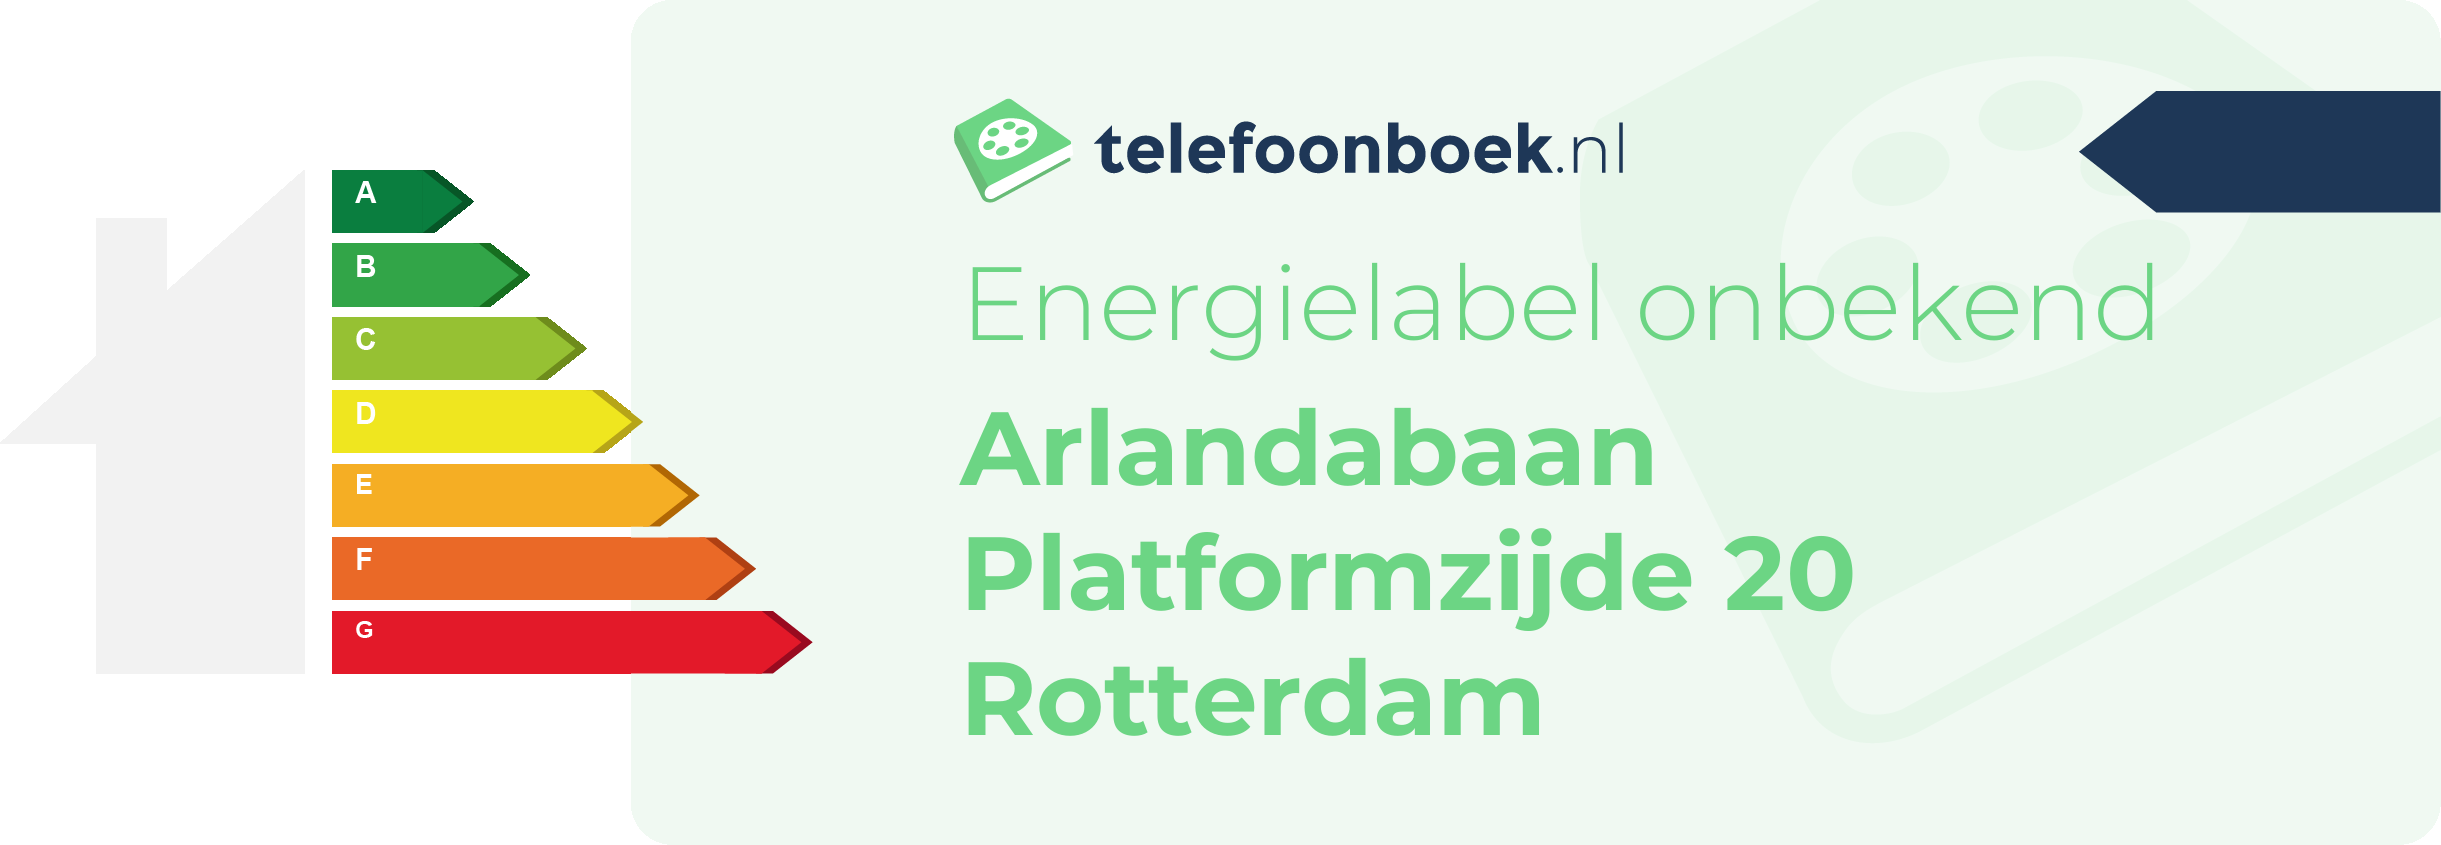 Energielabel Arlandabaan Platformzijde 20 Rotterdam